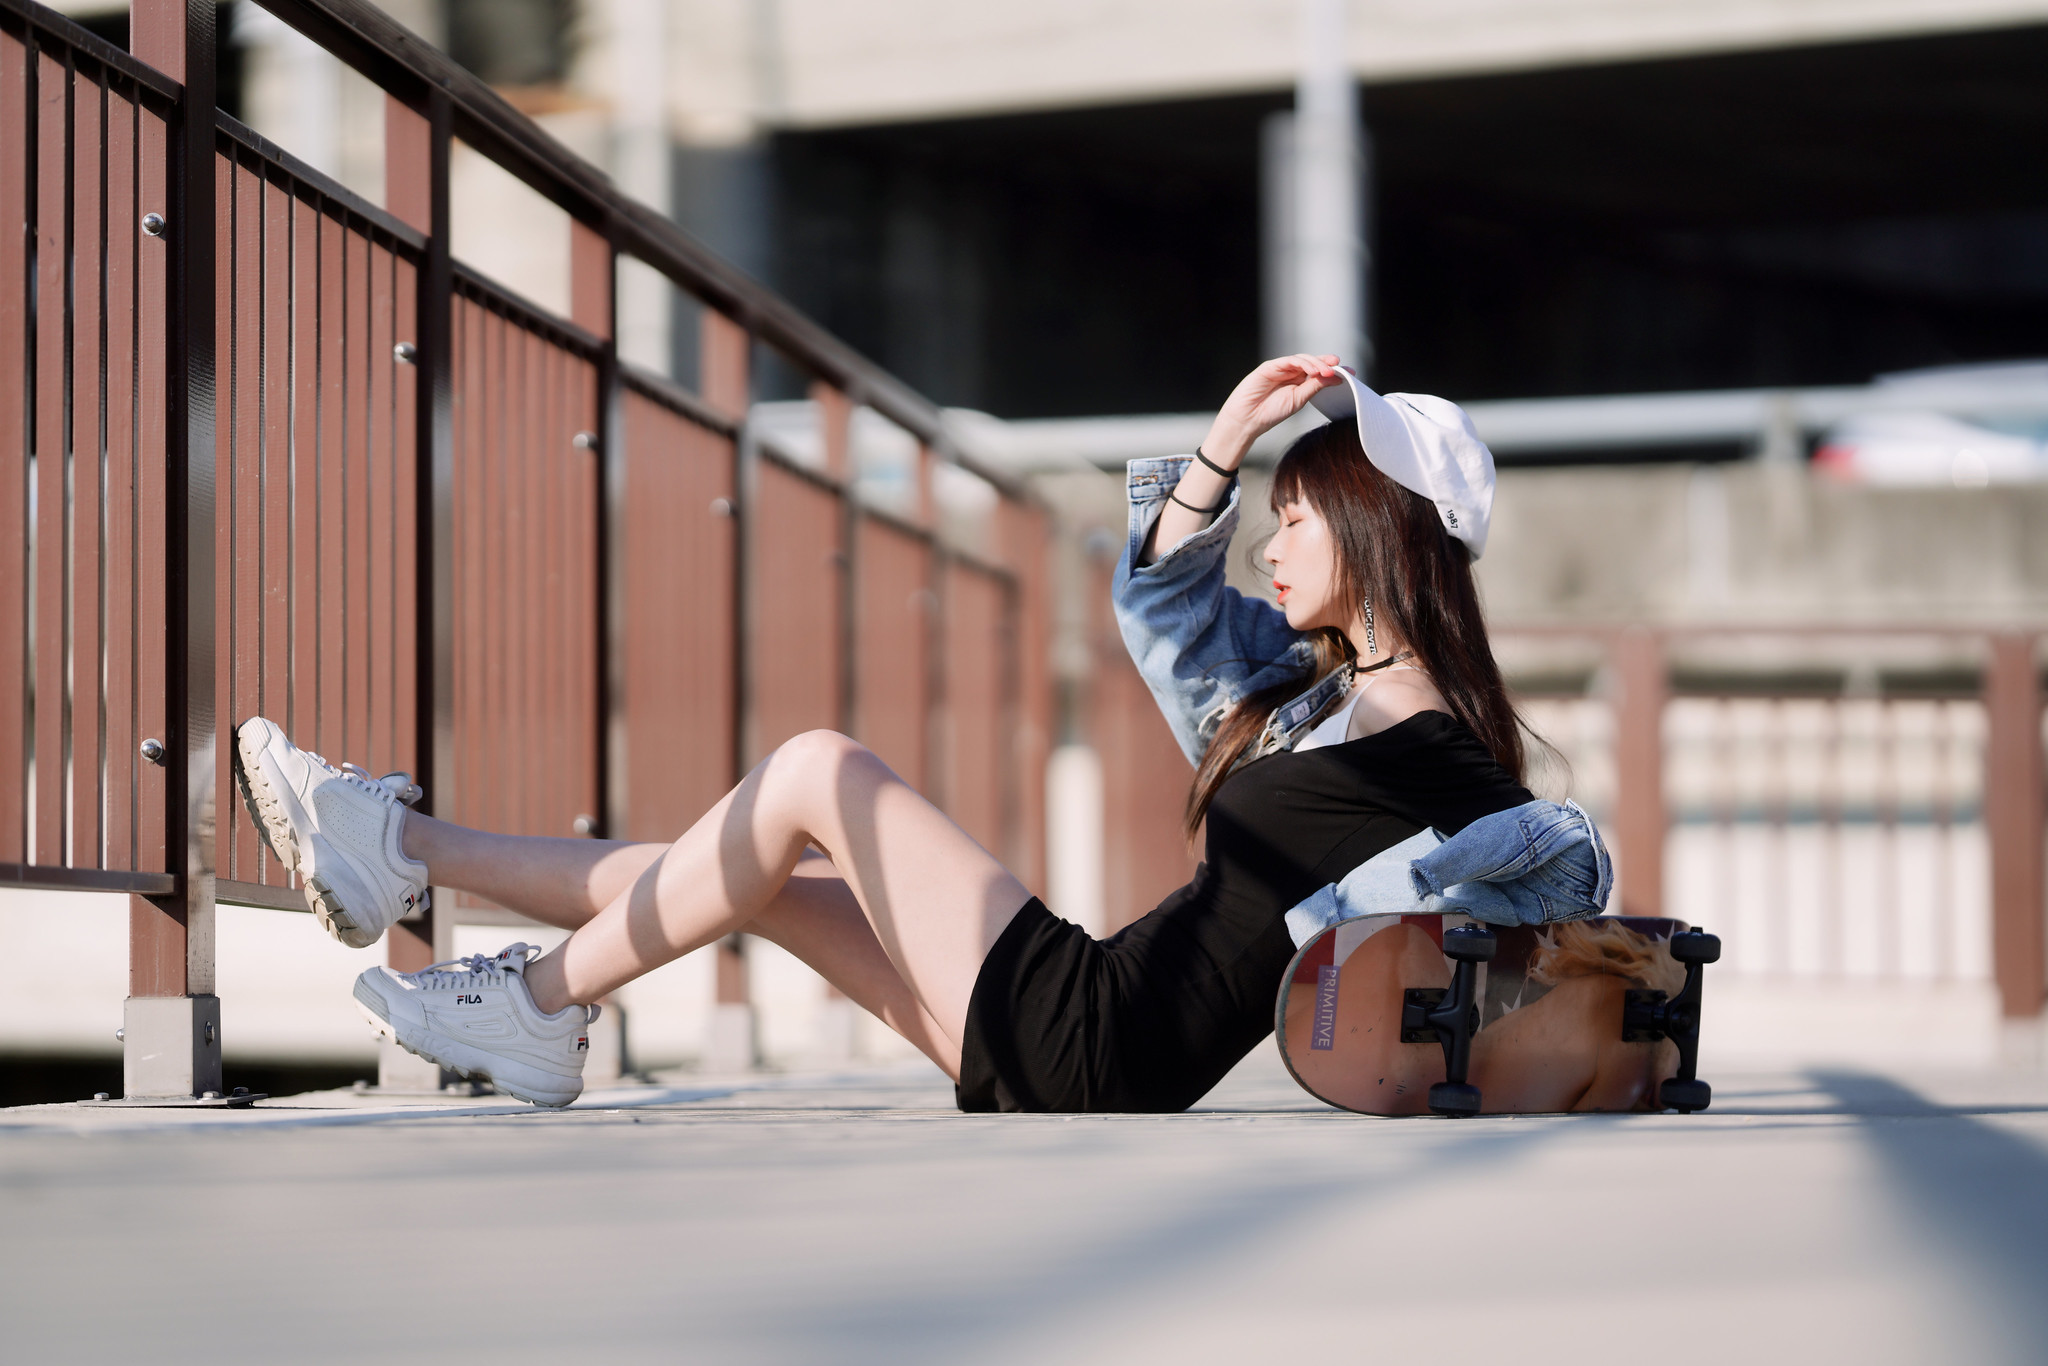 Serene Liu Women Model Asian Brunette Baseball Caps Dress Black Dress Skateboard Choker Closed Eyes  2048x1366